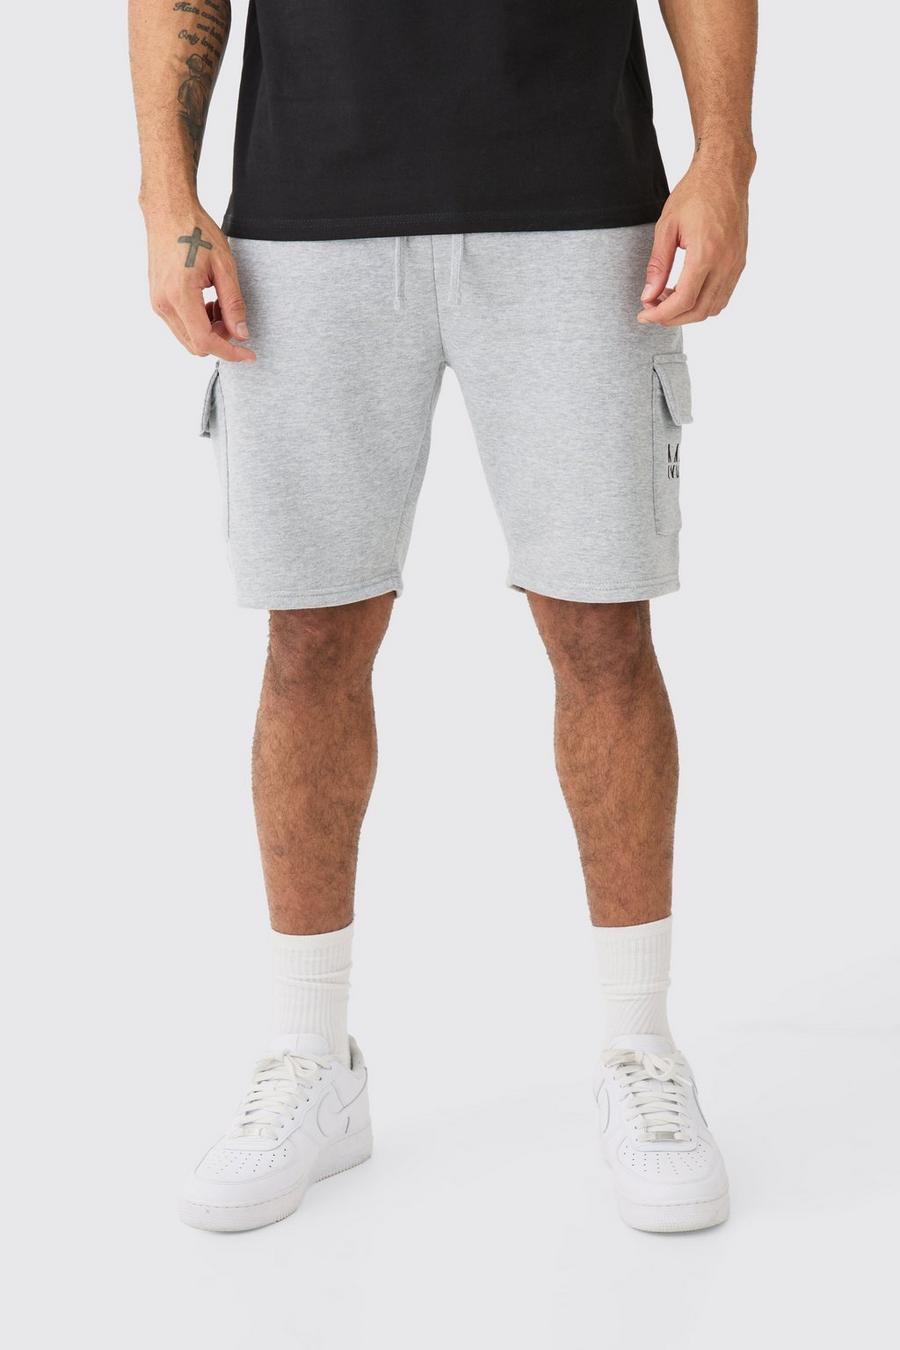 Lockere mittellange Man-Dash Cargo-Shorts, Grey marl